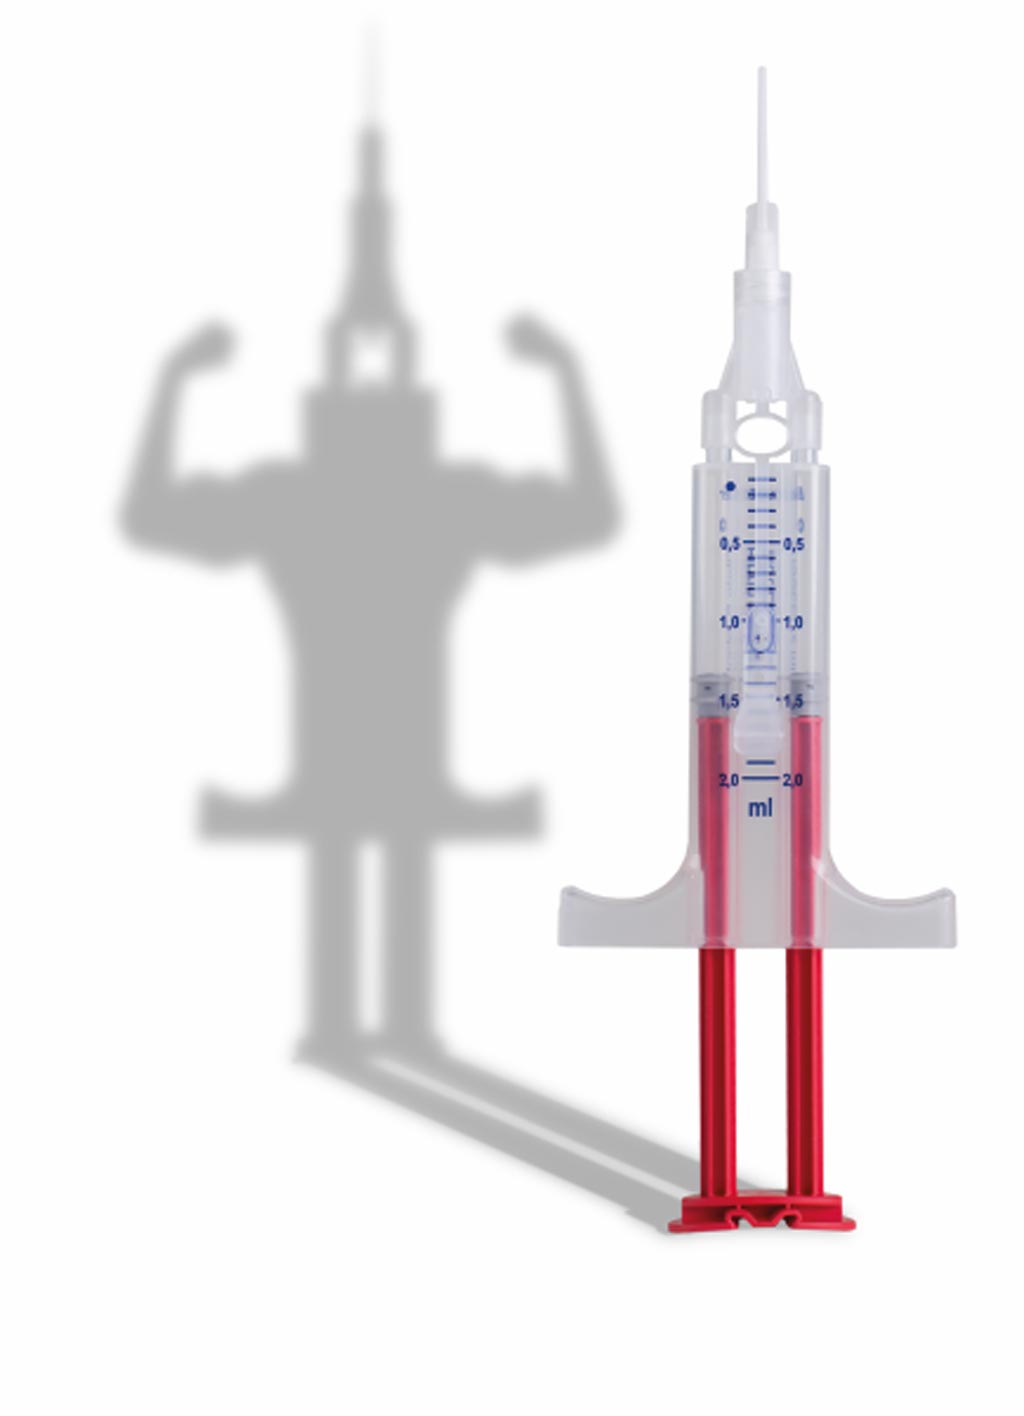 Image: The new 2-ml Prima syringe, designed for the Tisseel fibrin sealant (Photo courtesy of Baxter International).